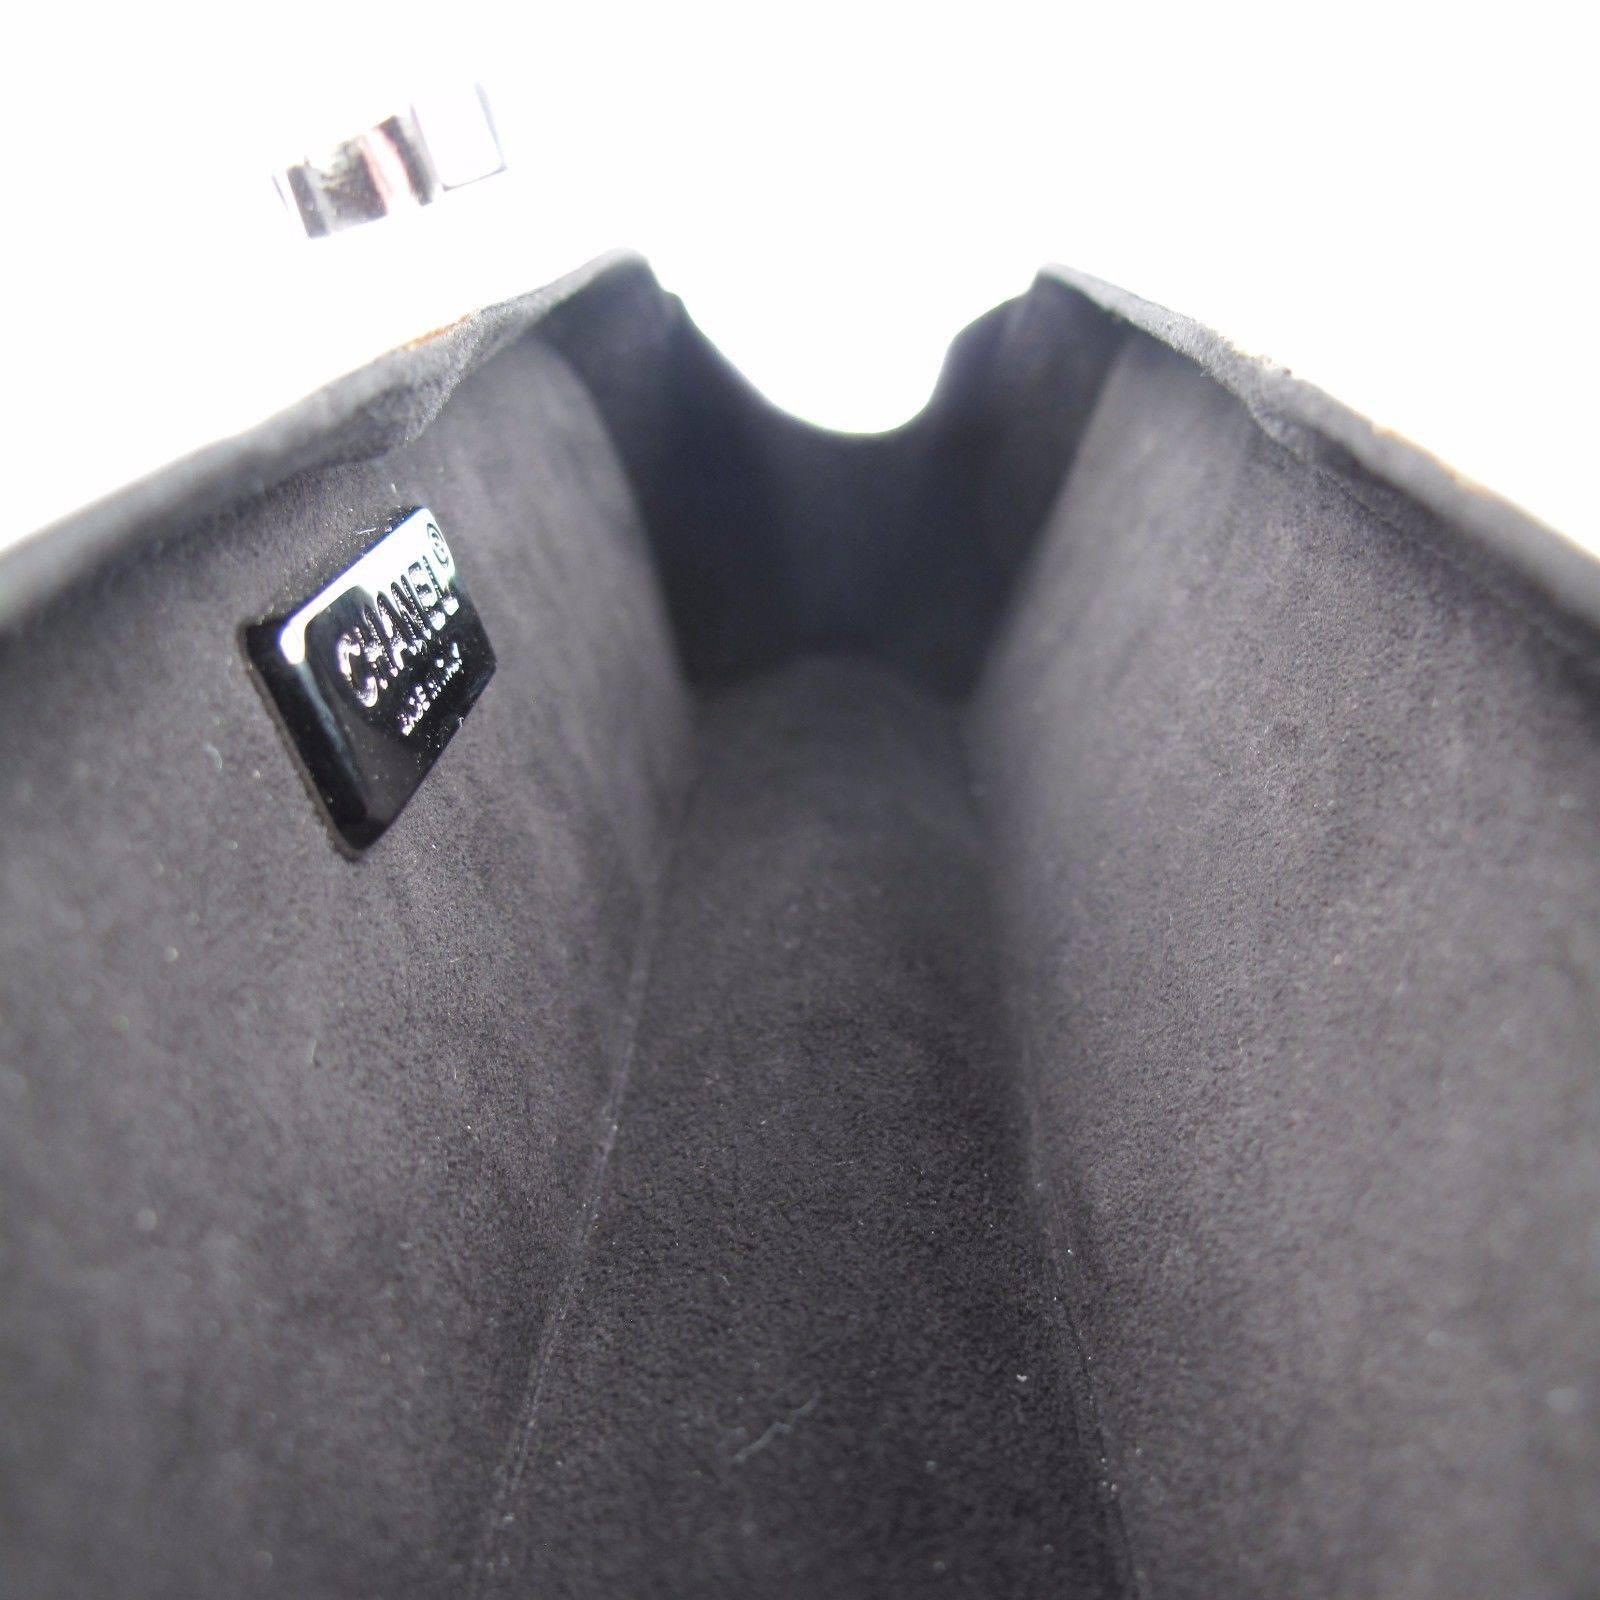 Chanel Clutch Box - Wristlet White & Black Leather CC Minaudie Bag Handbag Case 3